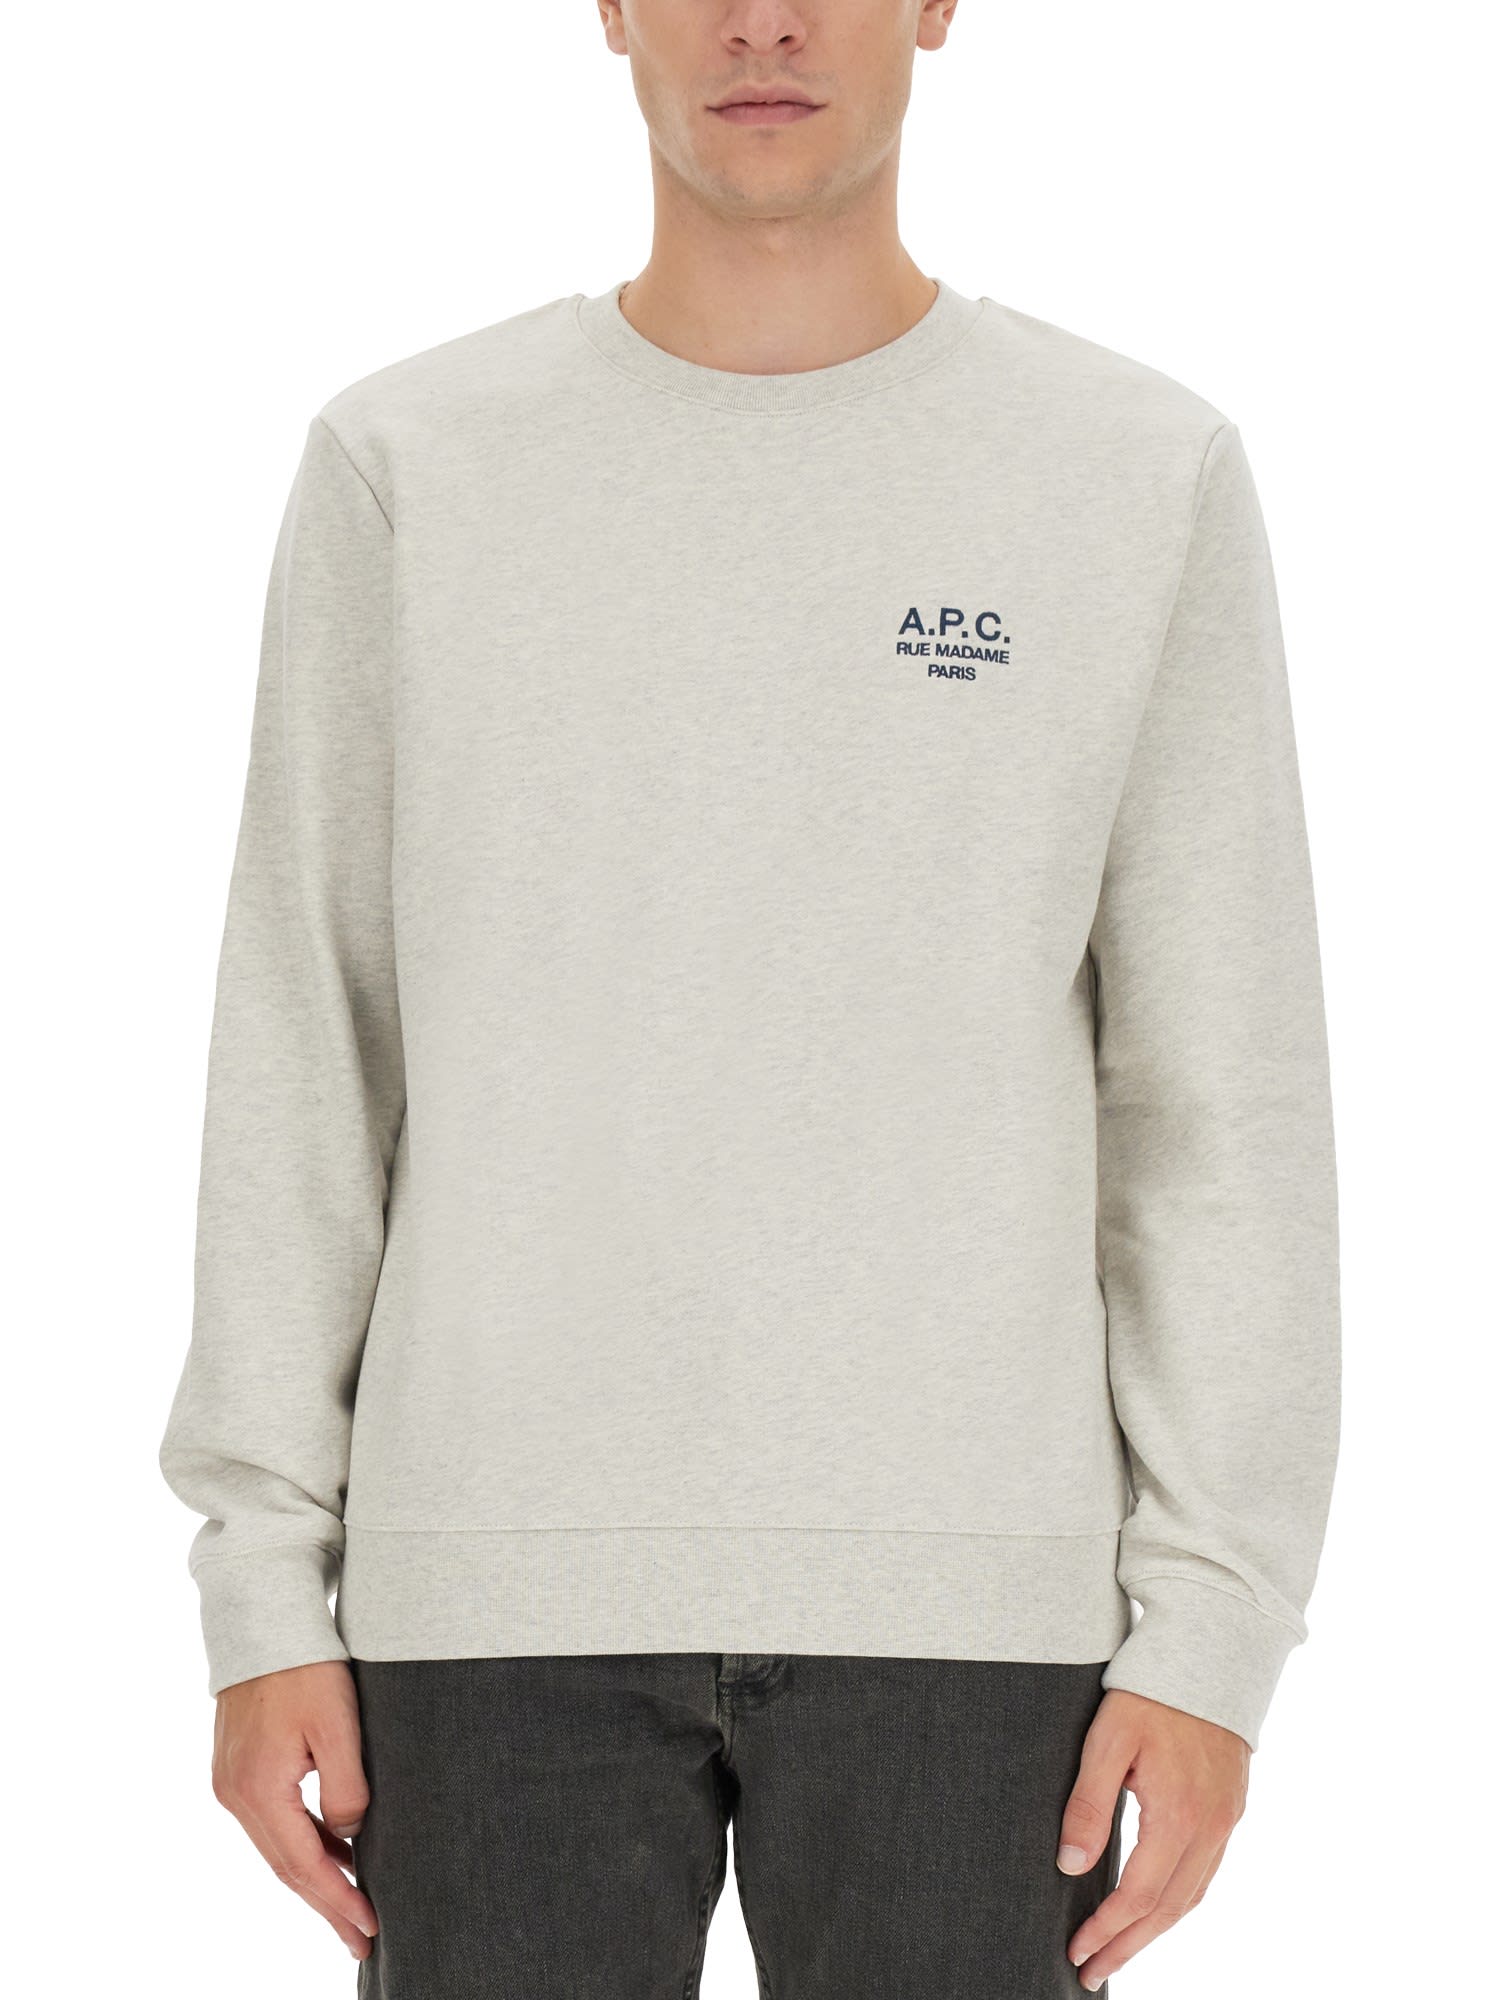 A.P.C. Rider Sweatshirt